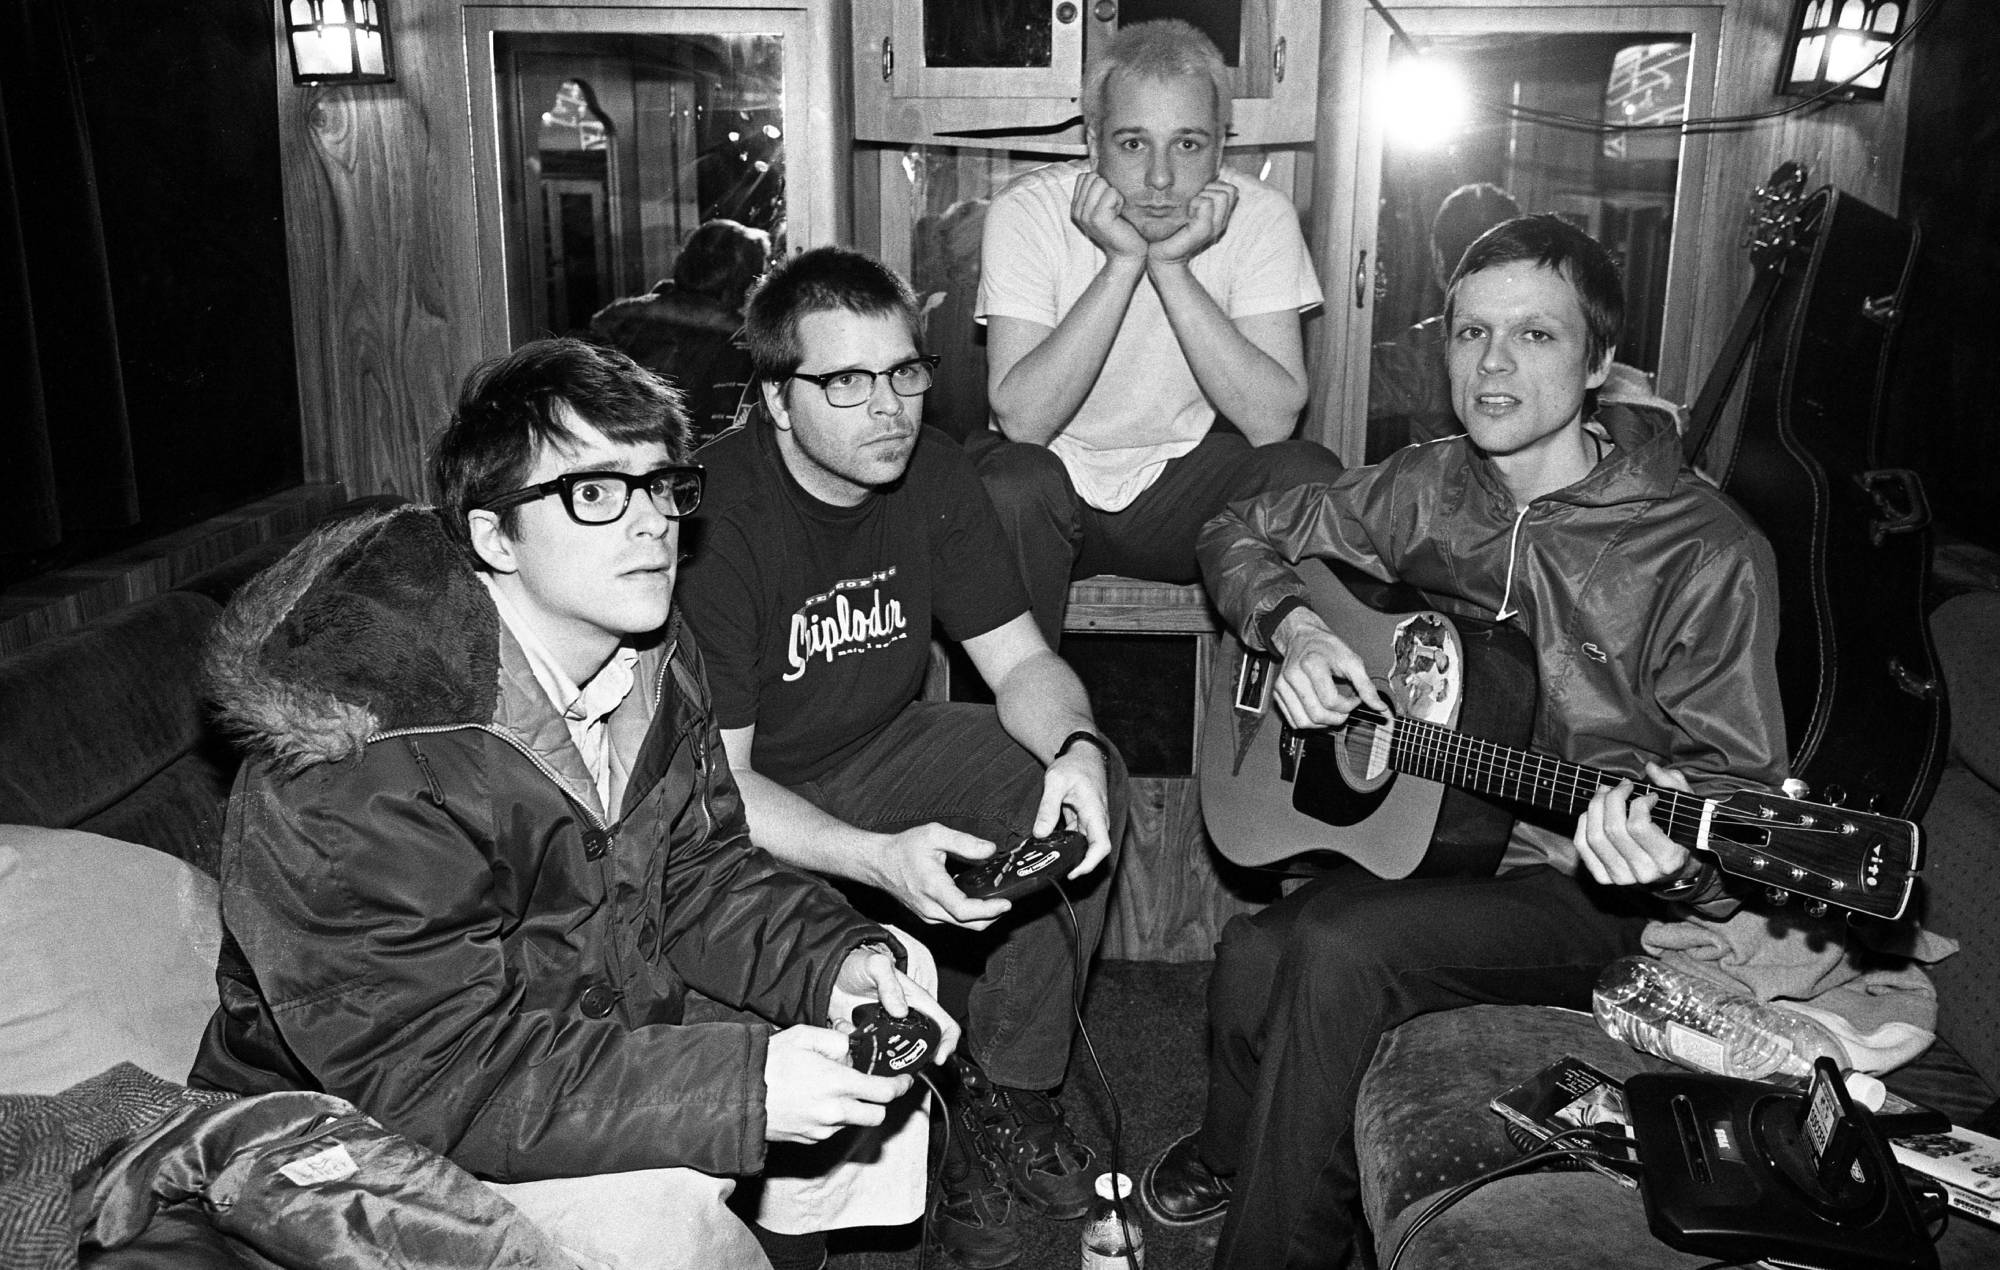 Rivers Cuomo reflexiona sobre 'Pinkerton' de Weezer: 